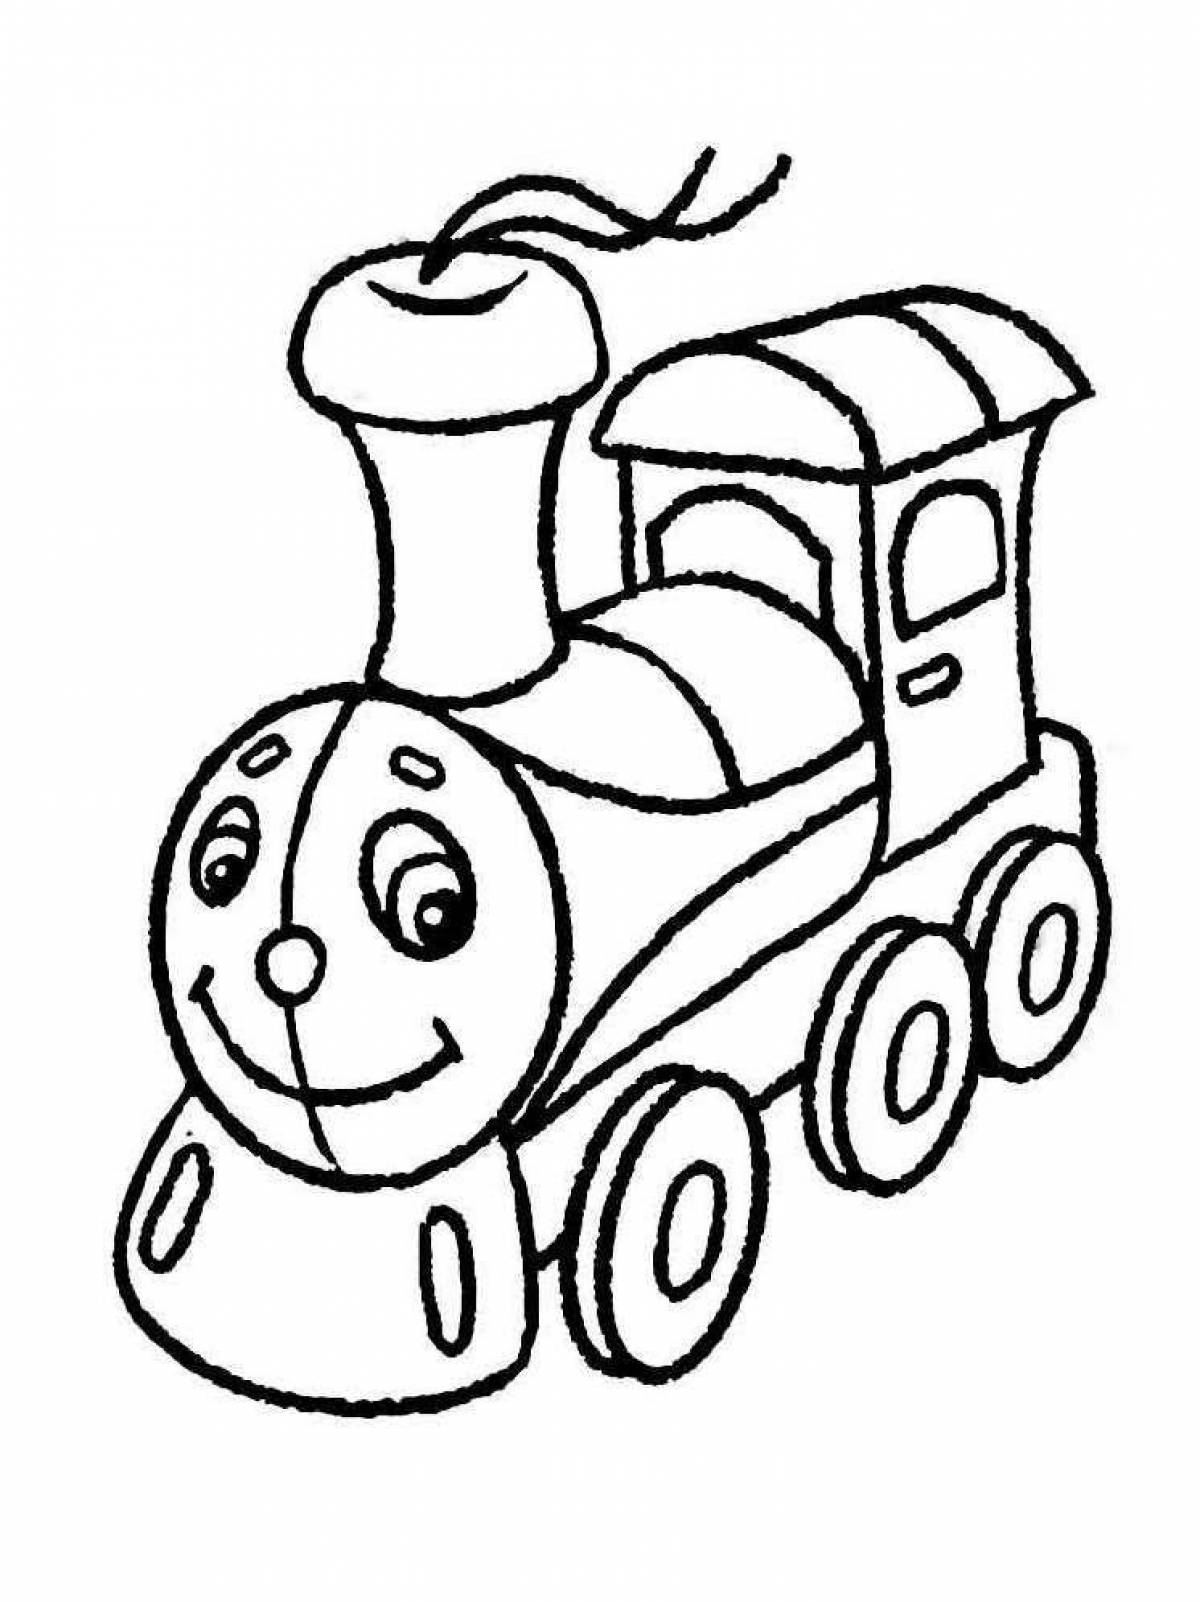 Fun train coloring for kids